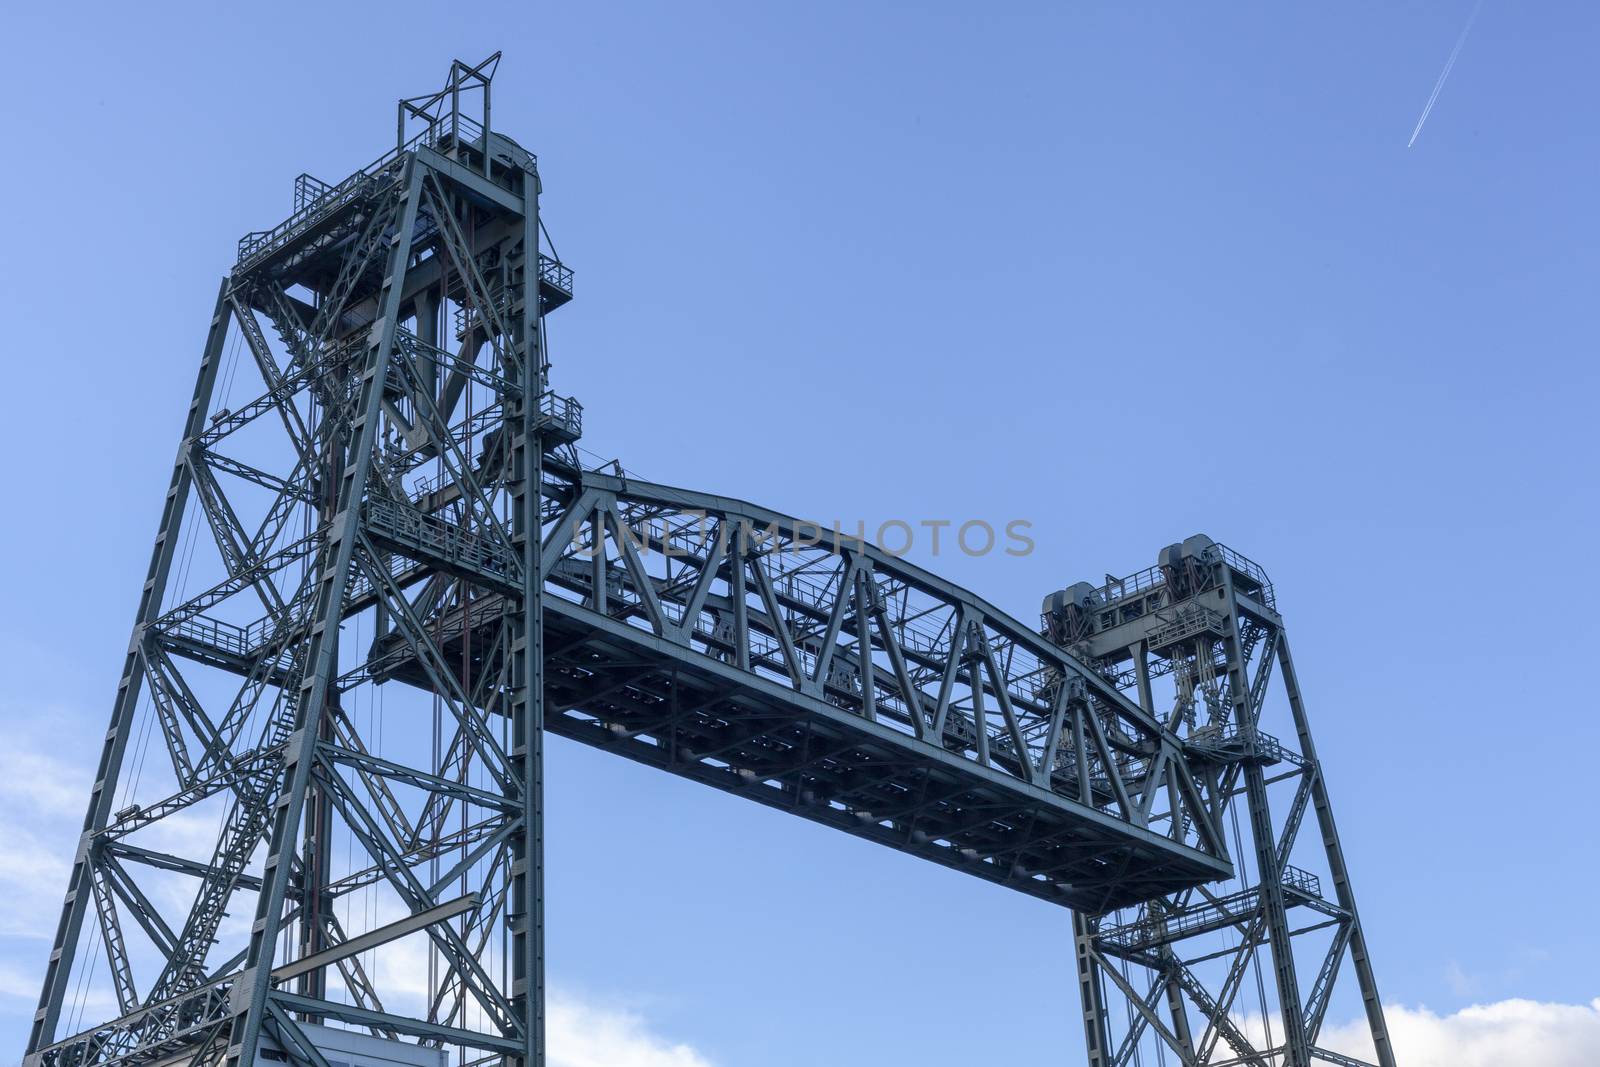 Monumental Koningshaven Railway Bridge, de Hef in Rotterdam - Image